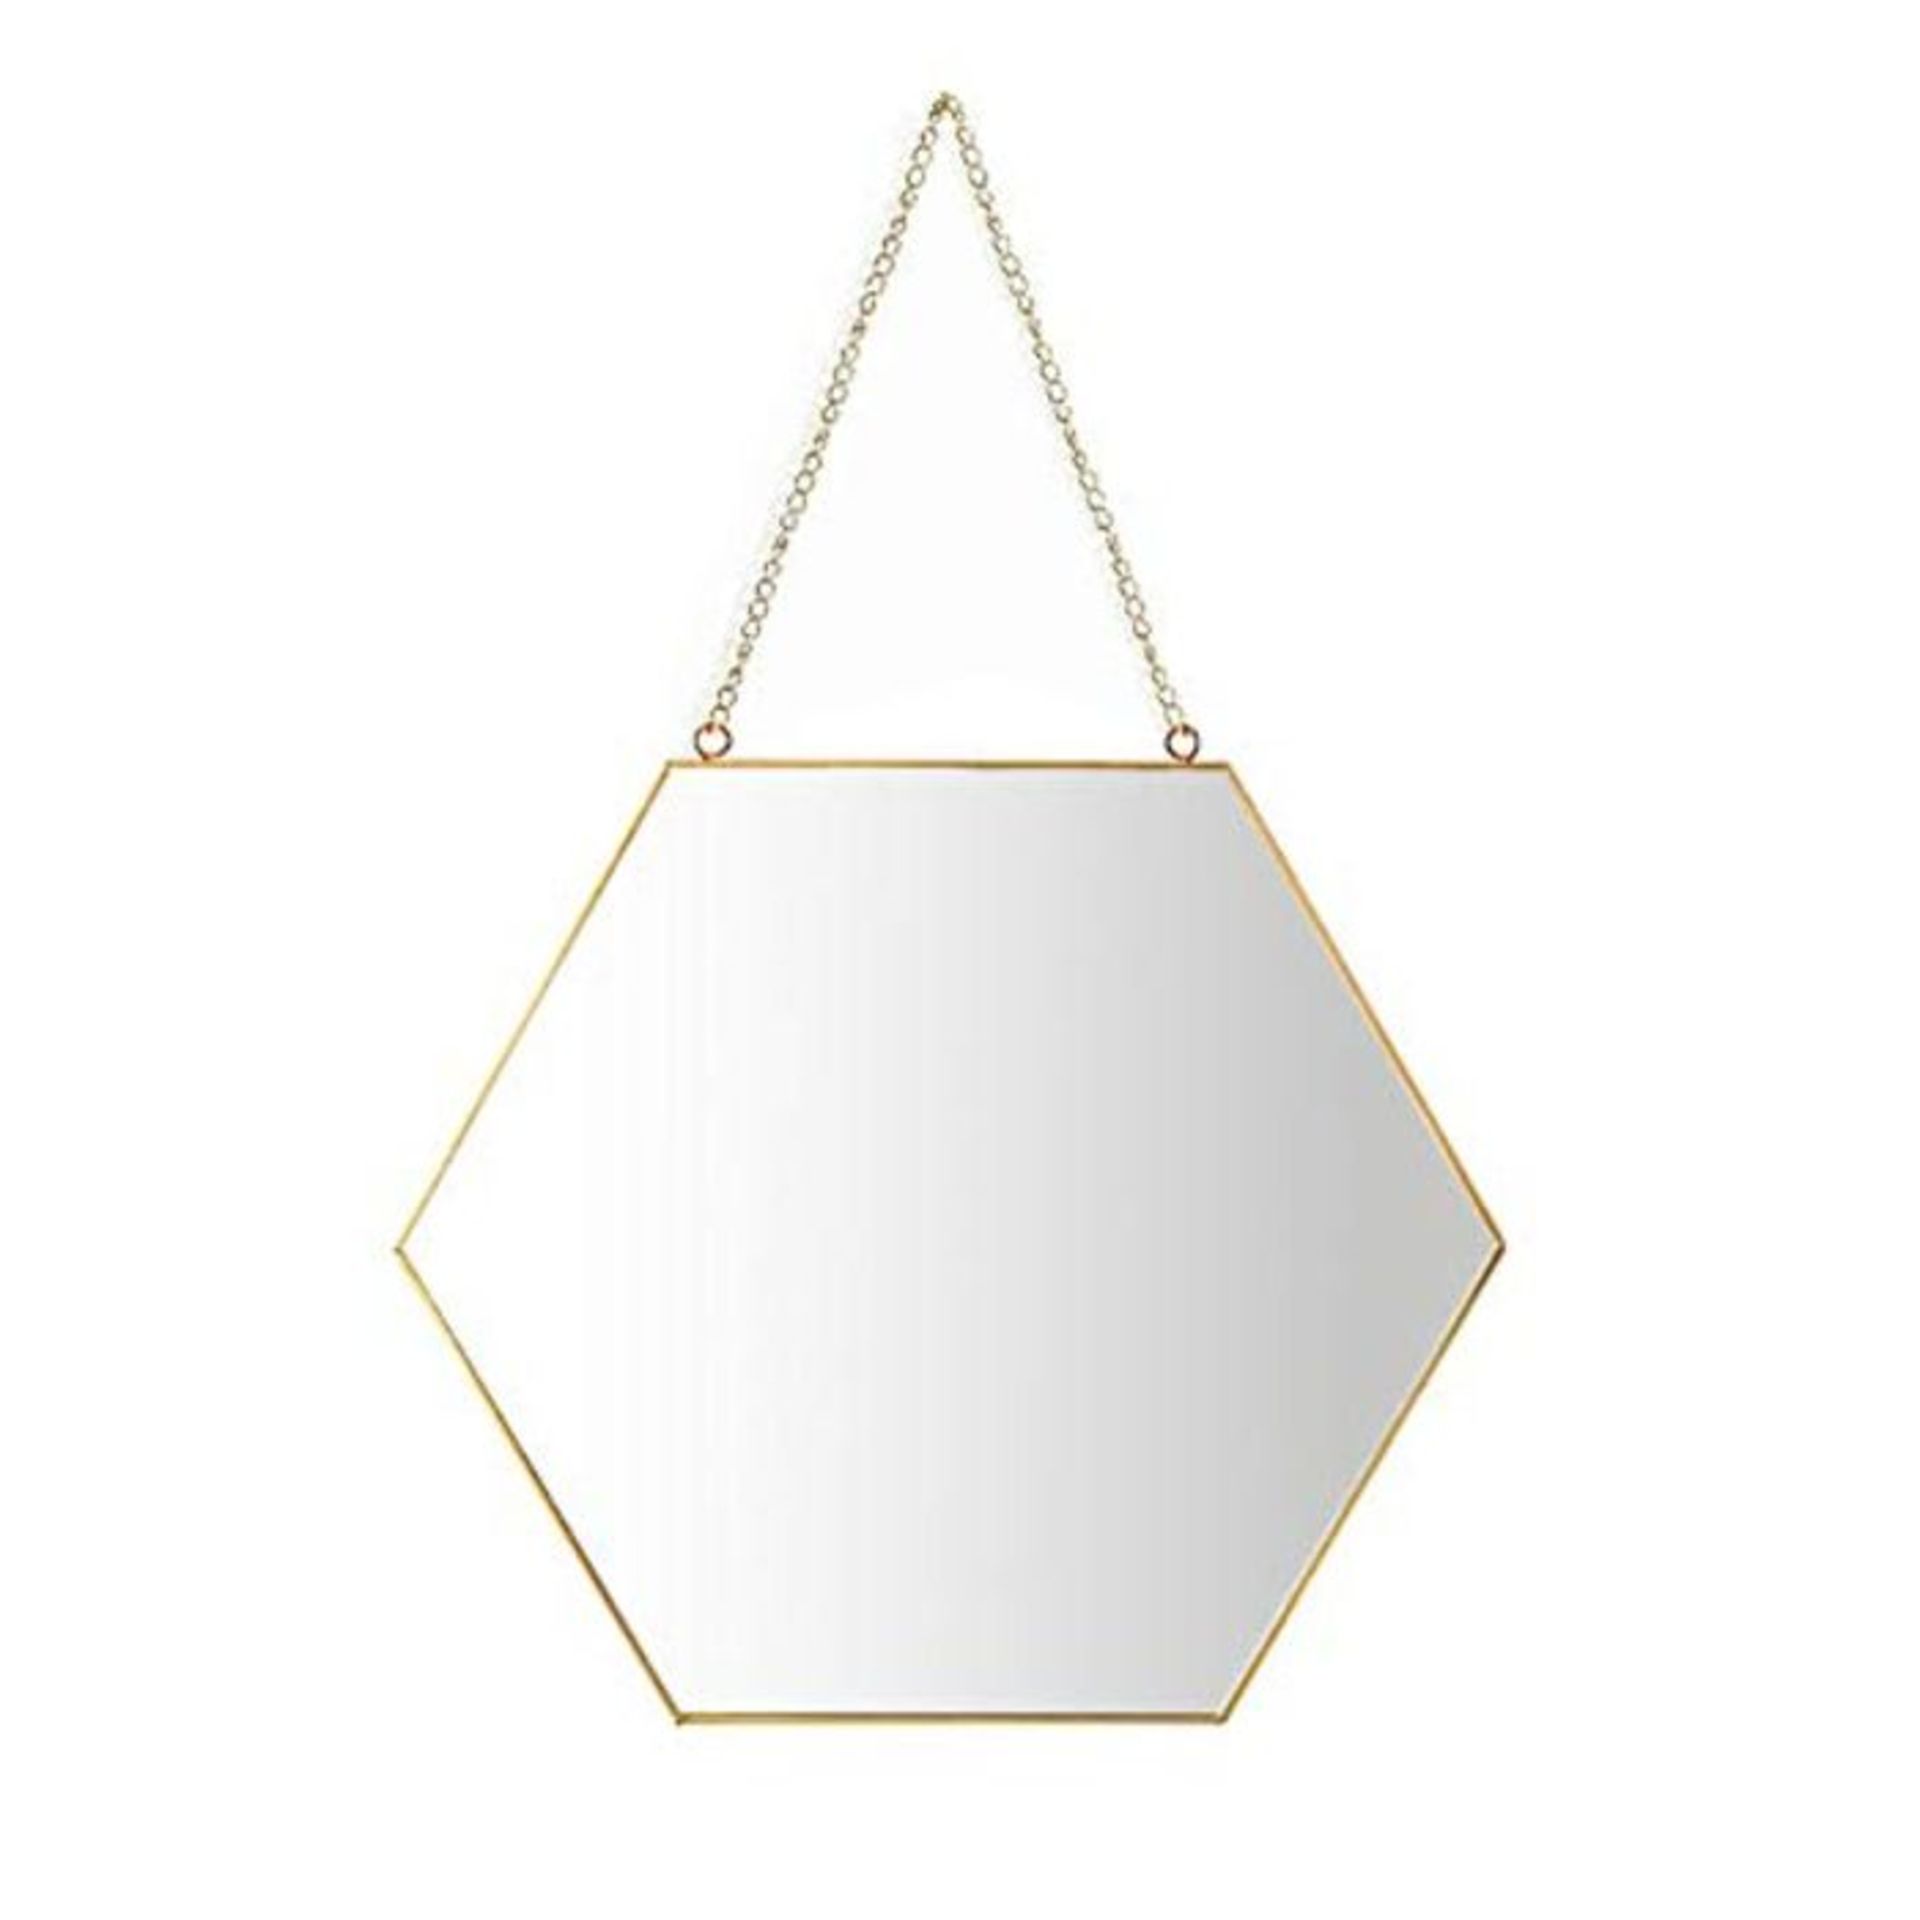 [CRACKED] Hanging Mirror, 26 x 30cm Hexagon Bathroom Makeup Mirror Brass Frame with Ha